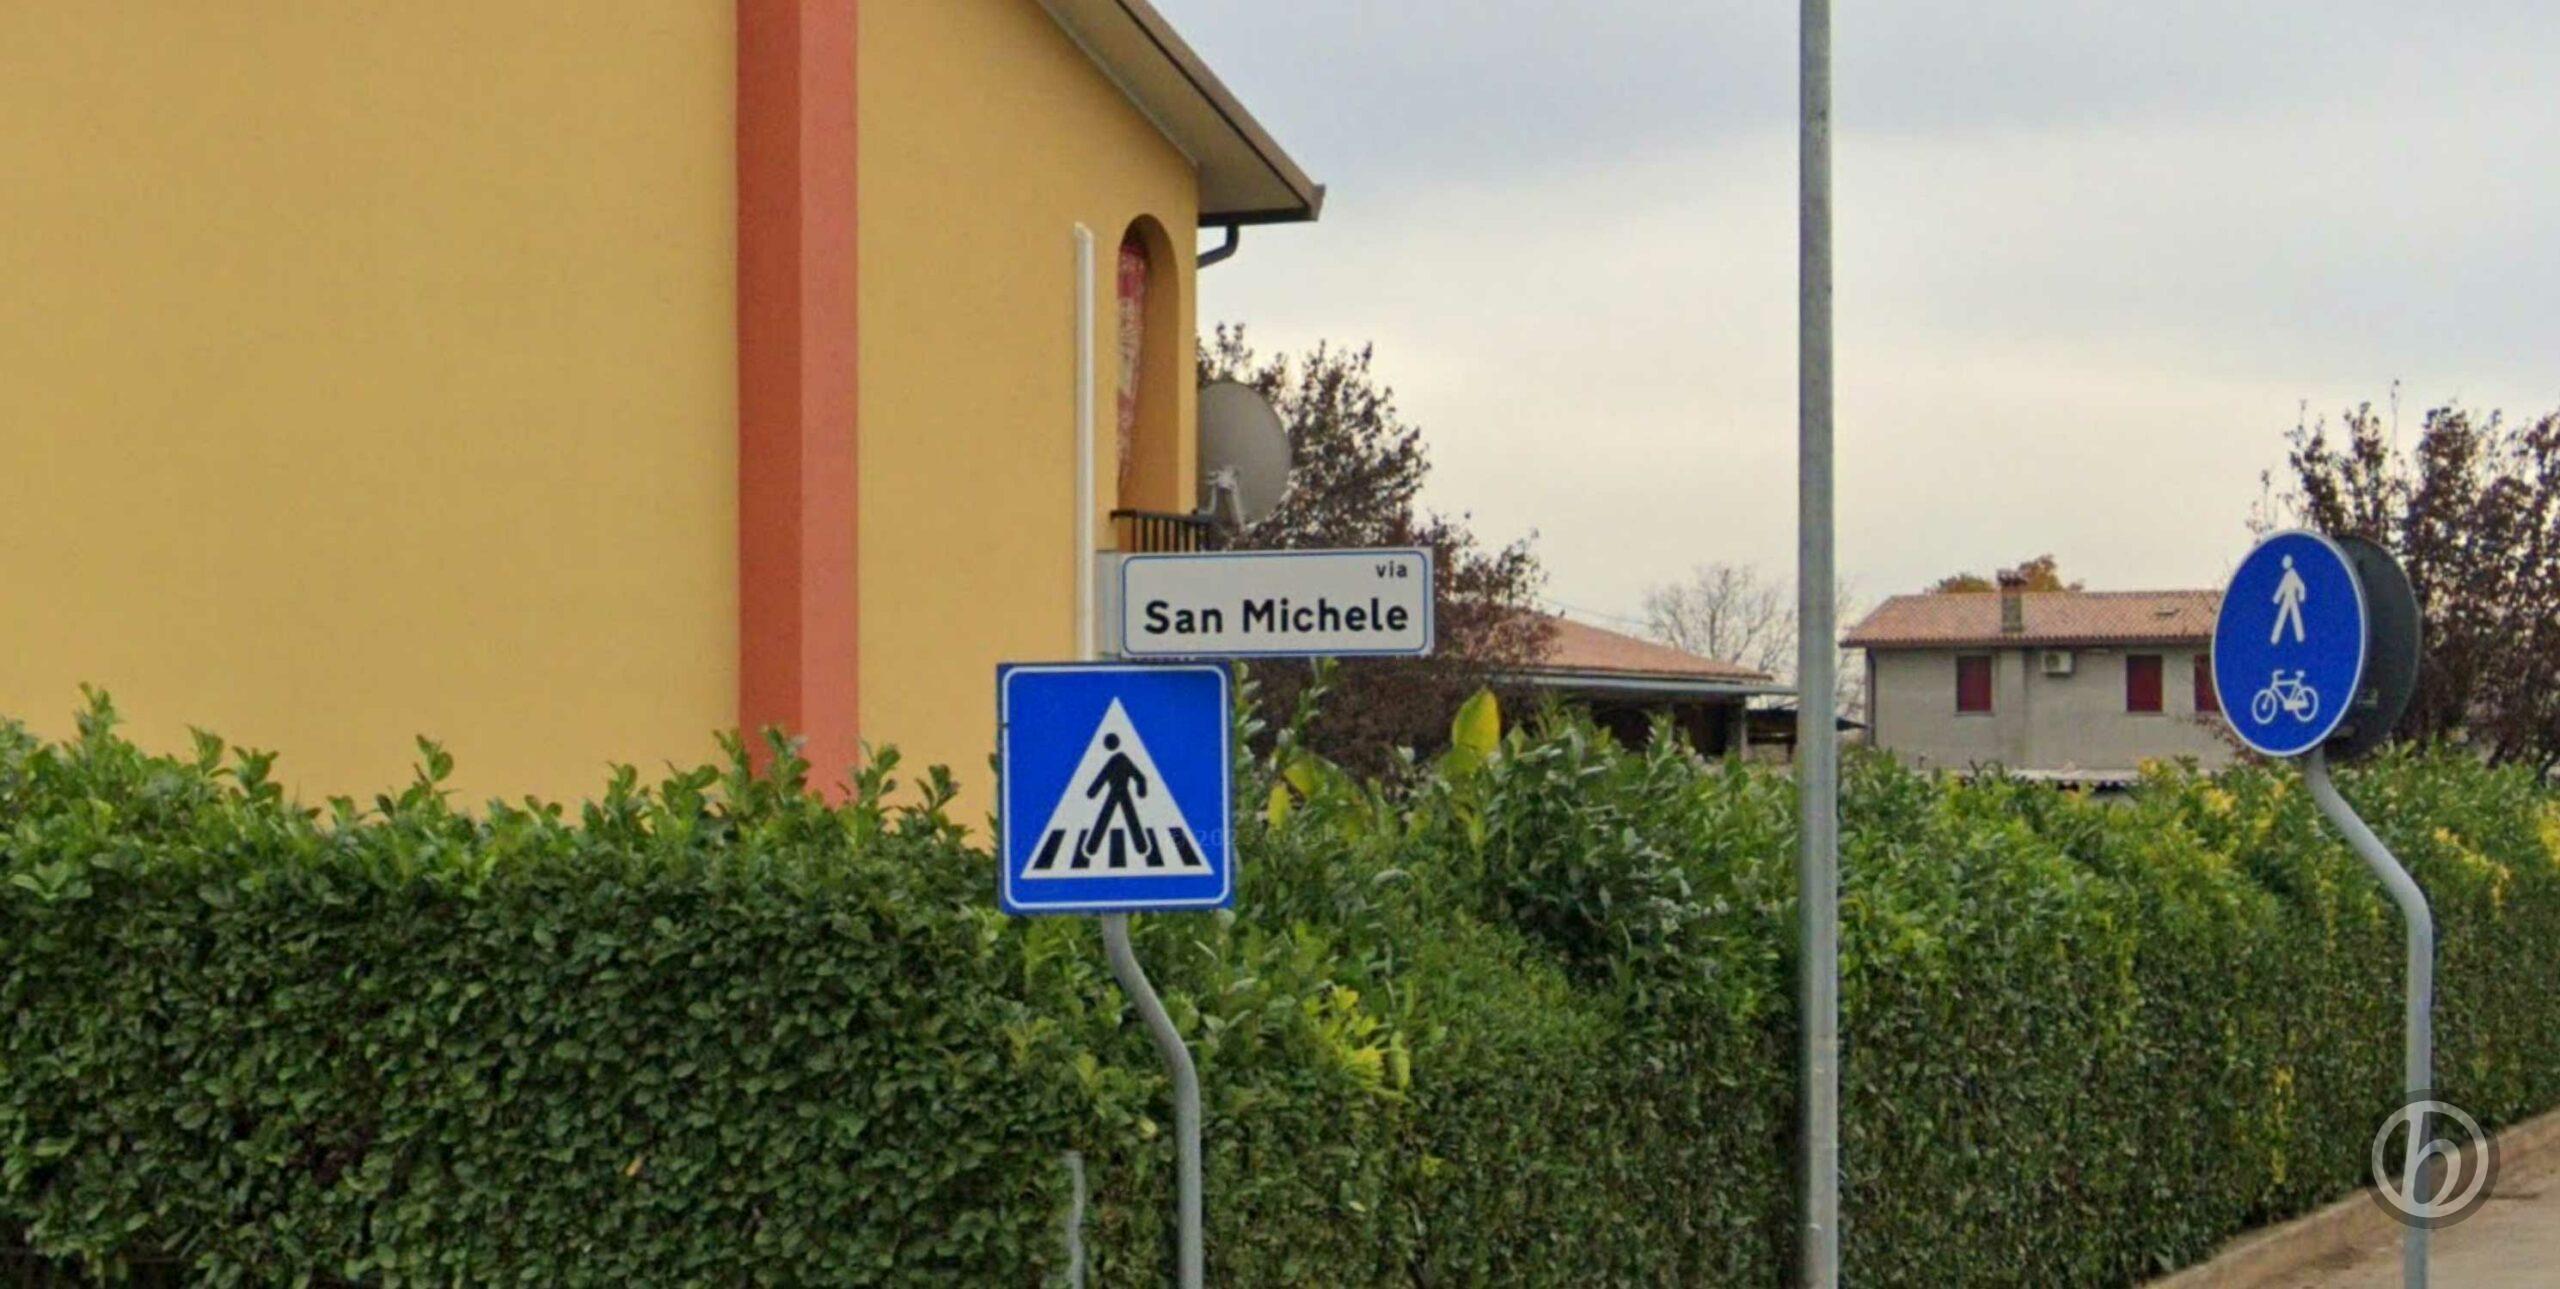 via San Michele